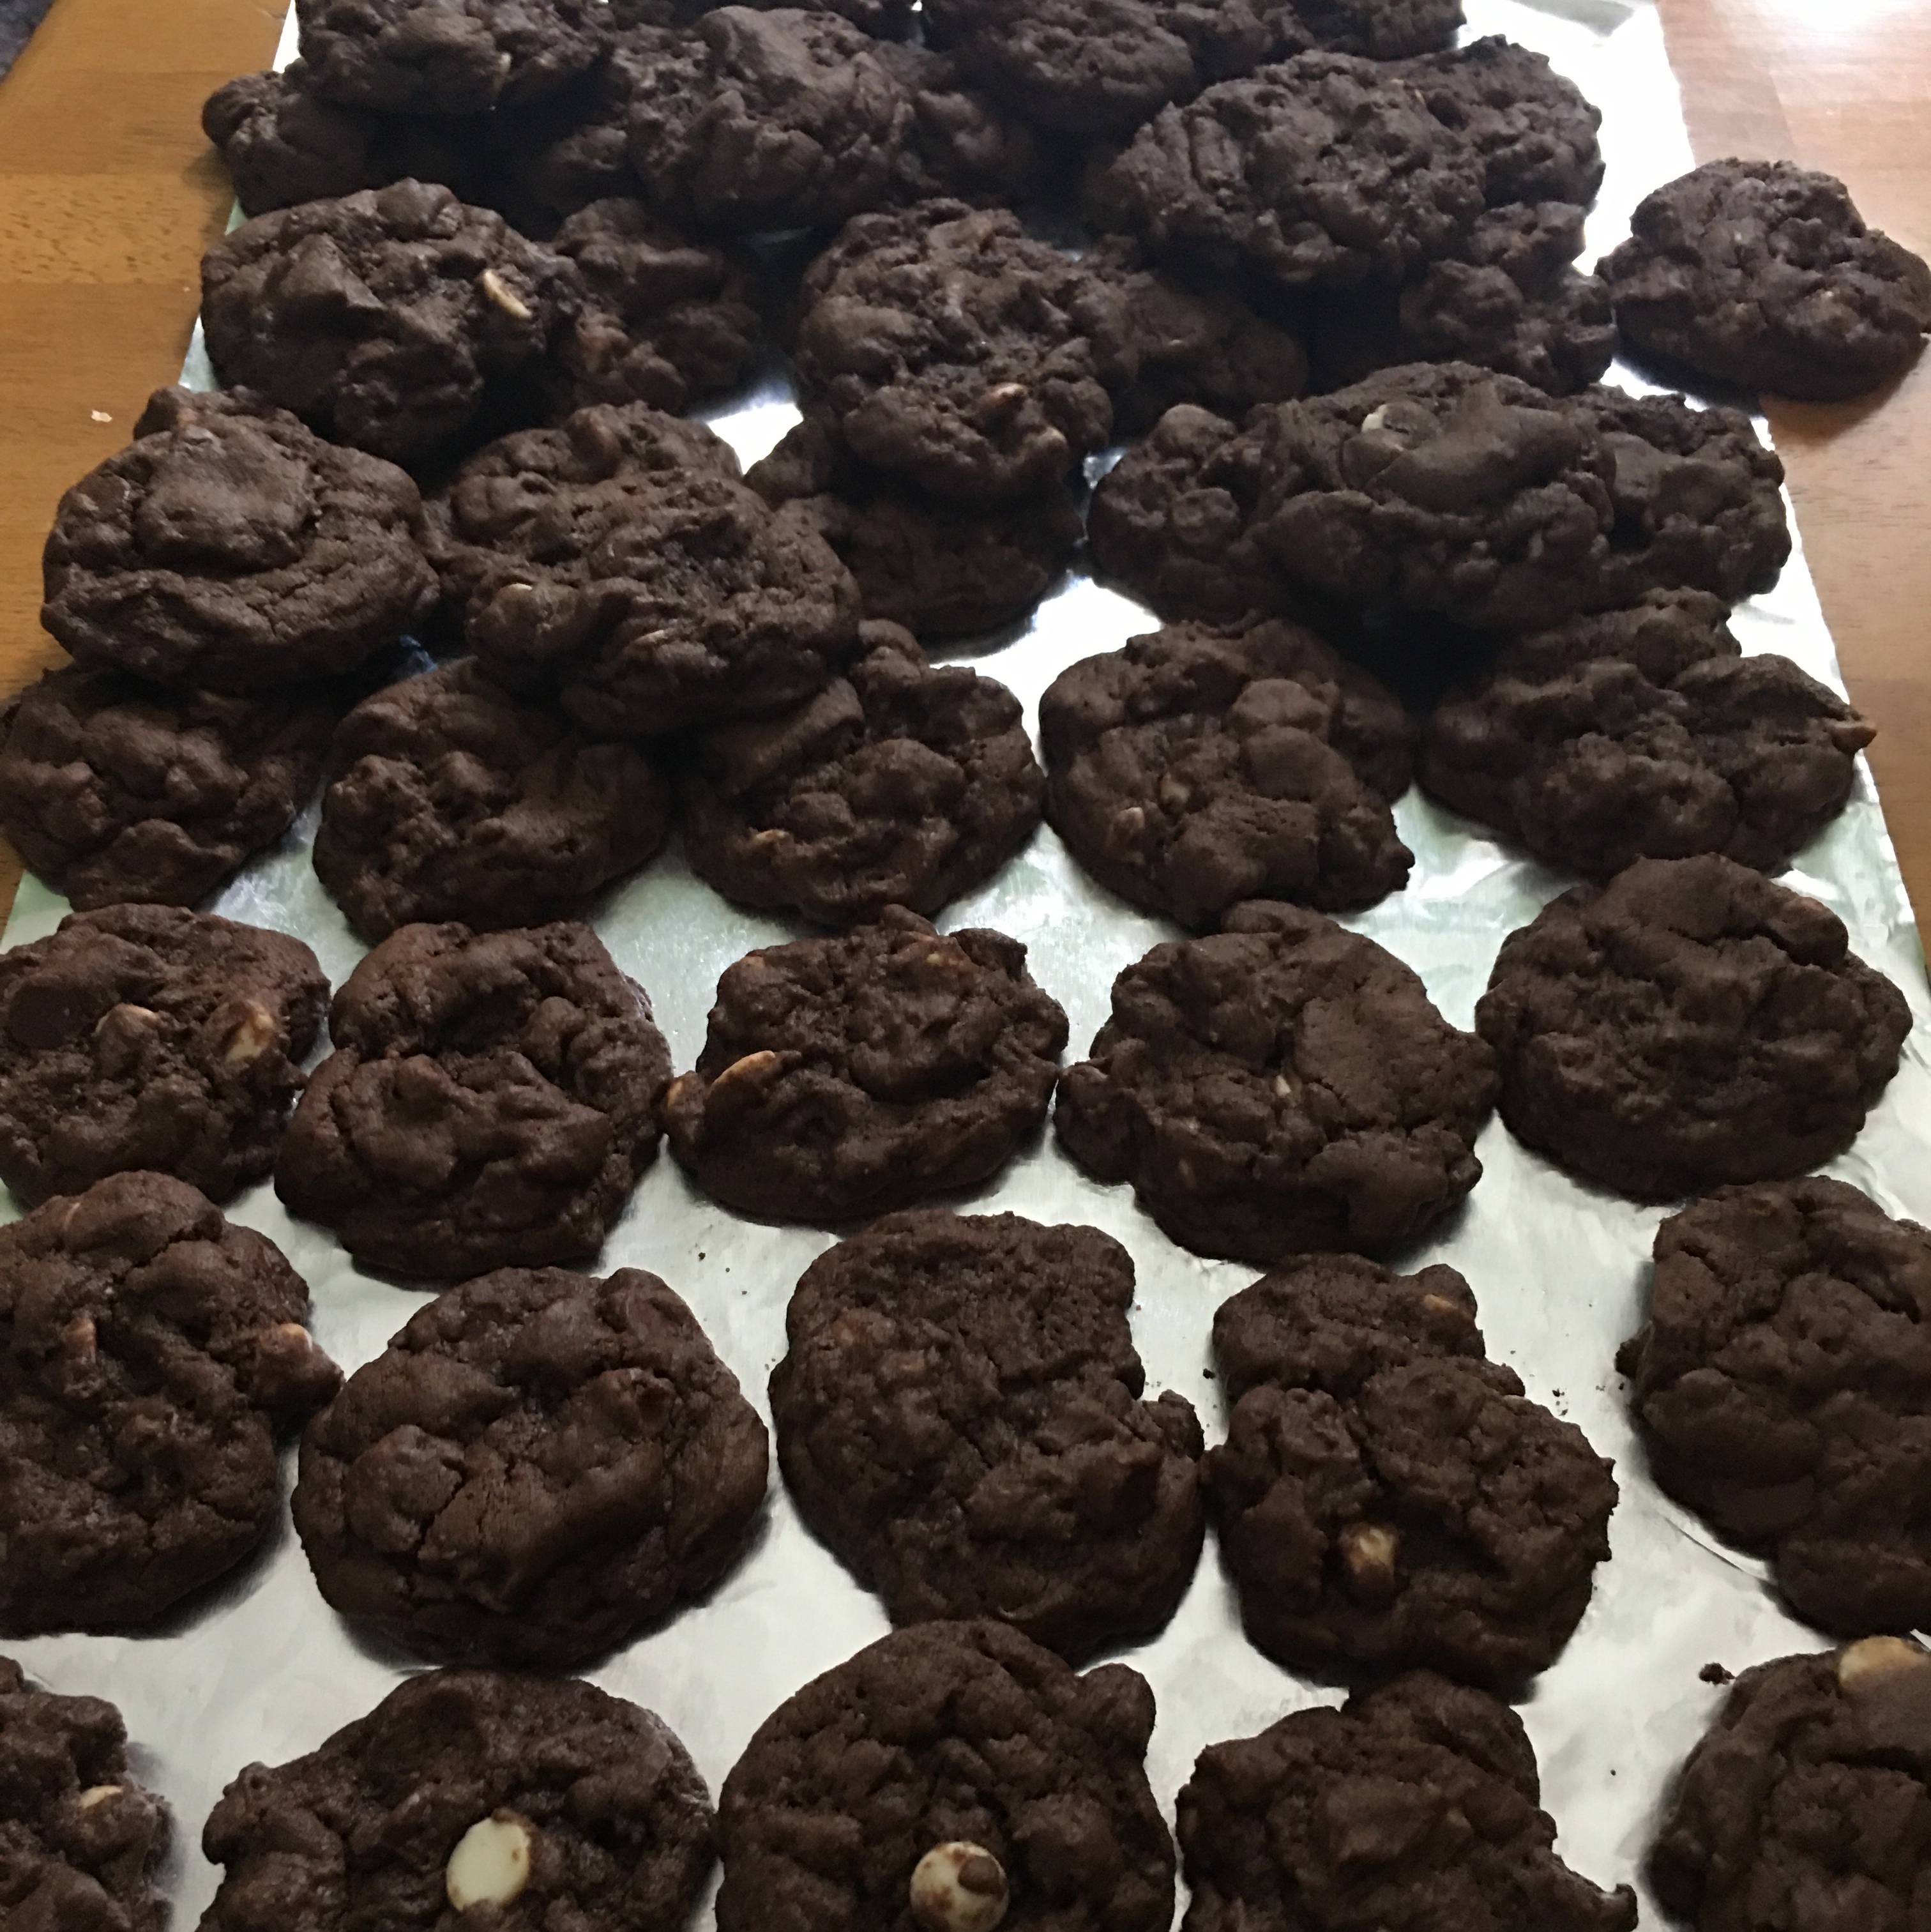 Chocolate Chocolate Chip Cookies 